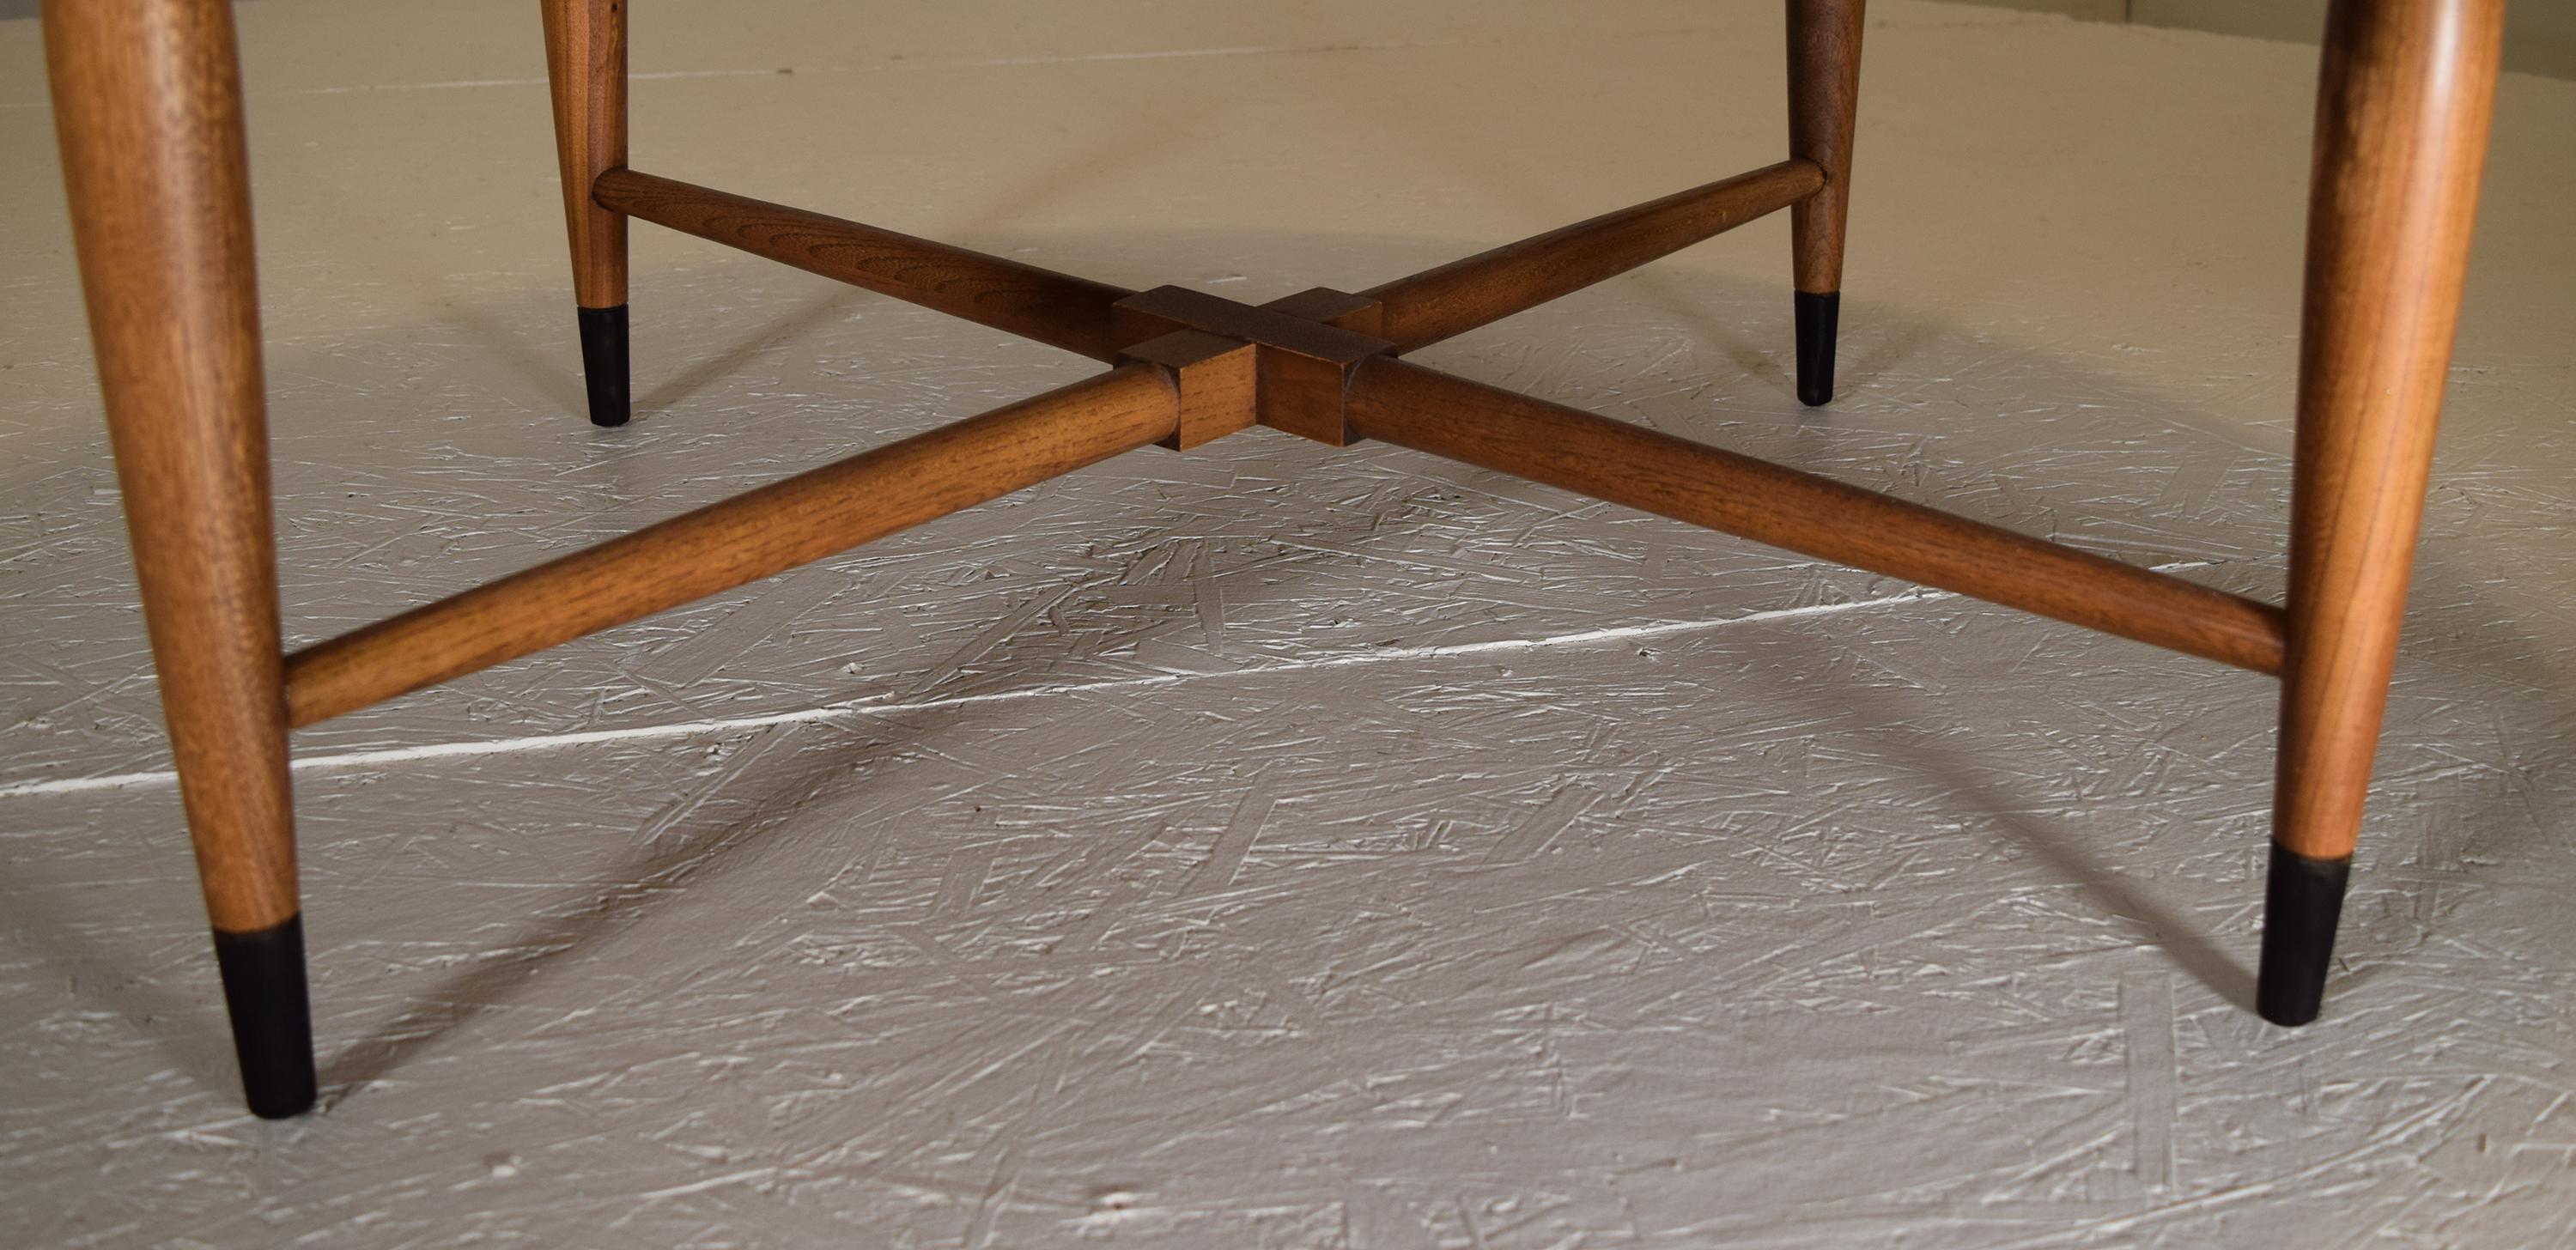 Mid-20th Century Sunburst Walnut Coffee Table with Dove Tail